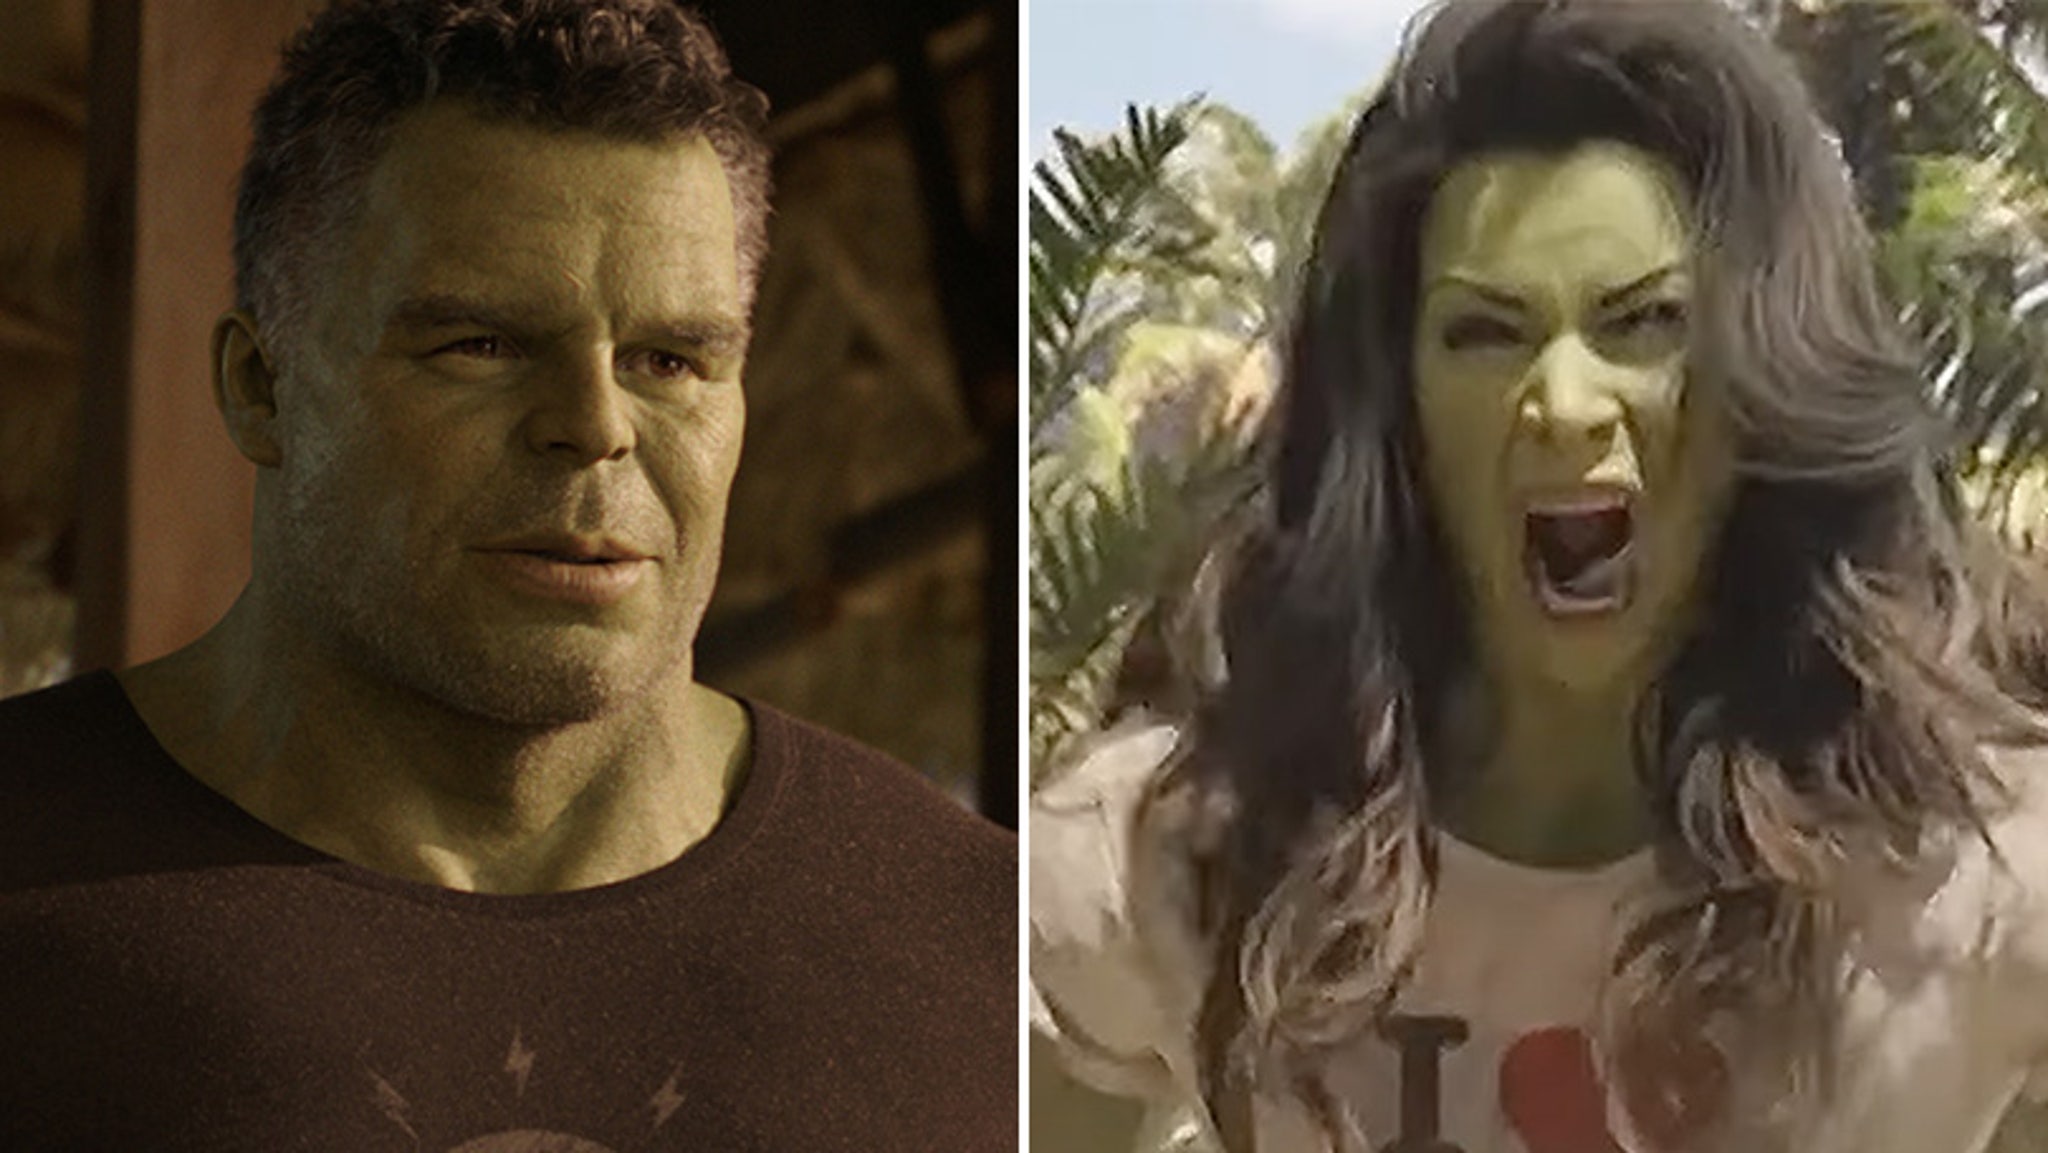 She-Hulk bags a near-perfect Rotten Tomatoes score despite previous backlash